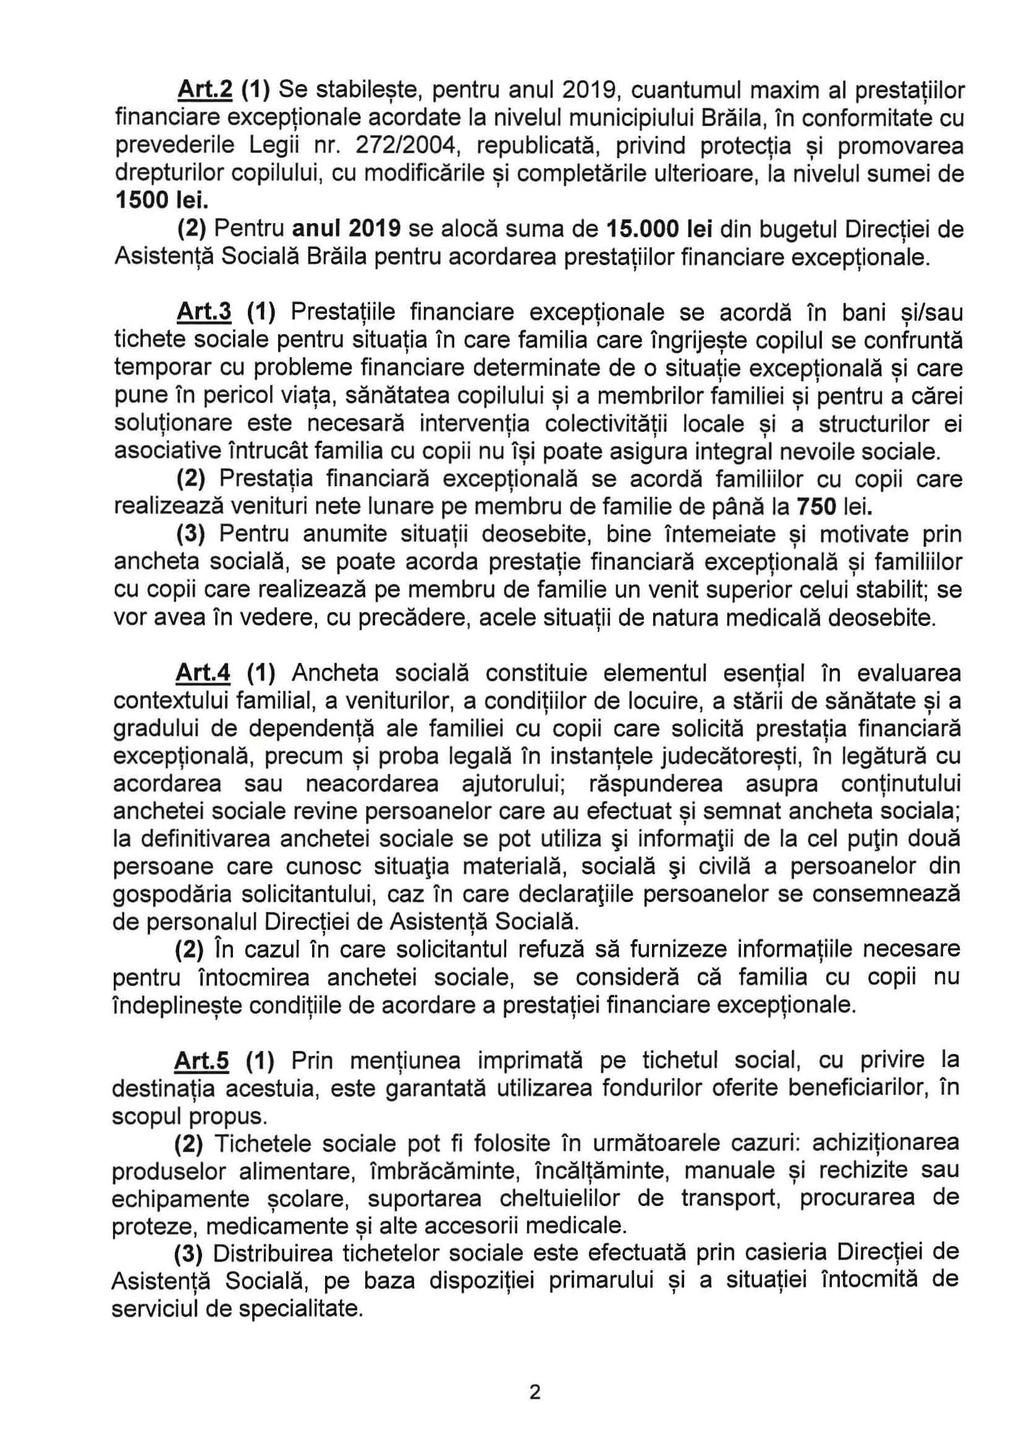 Art.2 (1) Se stabile~te, pentru anul 2019, cuantumul maxim al prestatiilr financiare exceptinale acrdate la nivelul municipiului Braila, in cnfrmitate cu prevederile Legii nr.